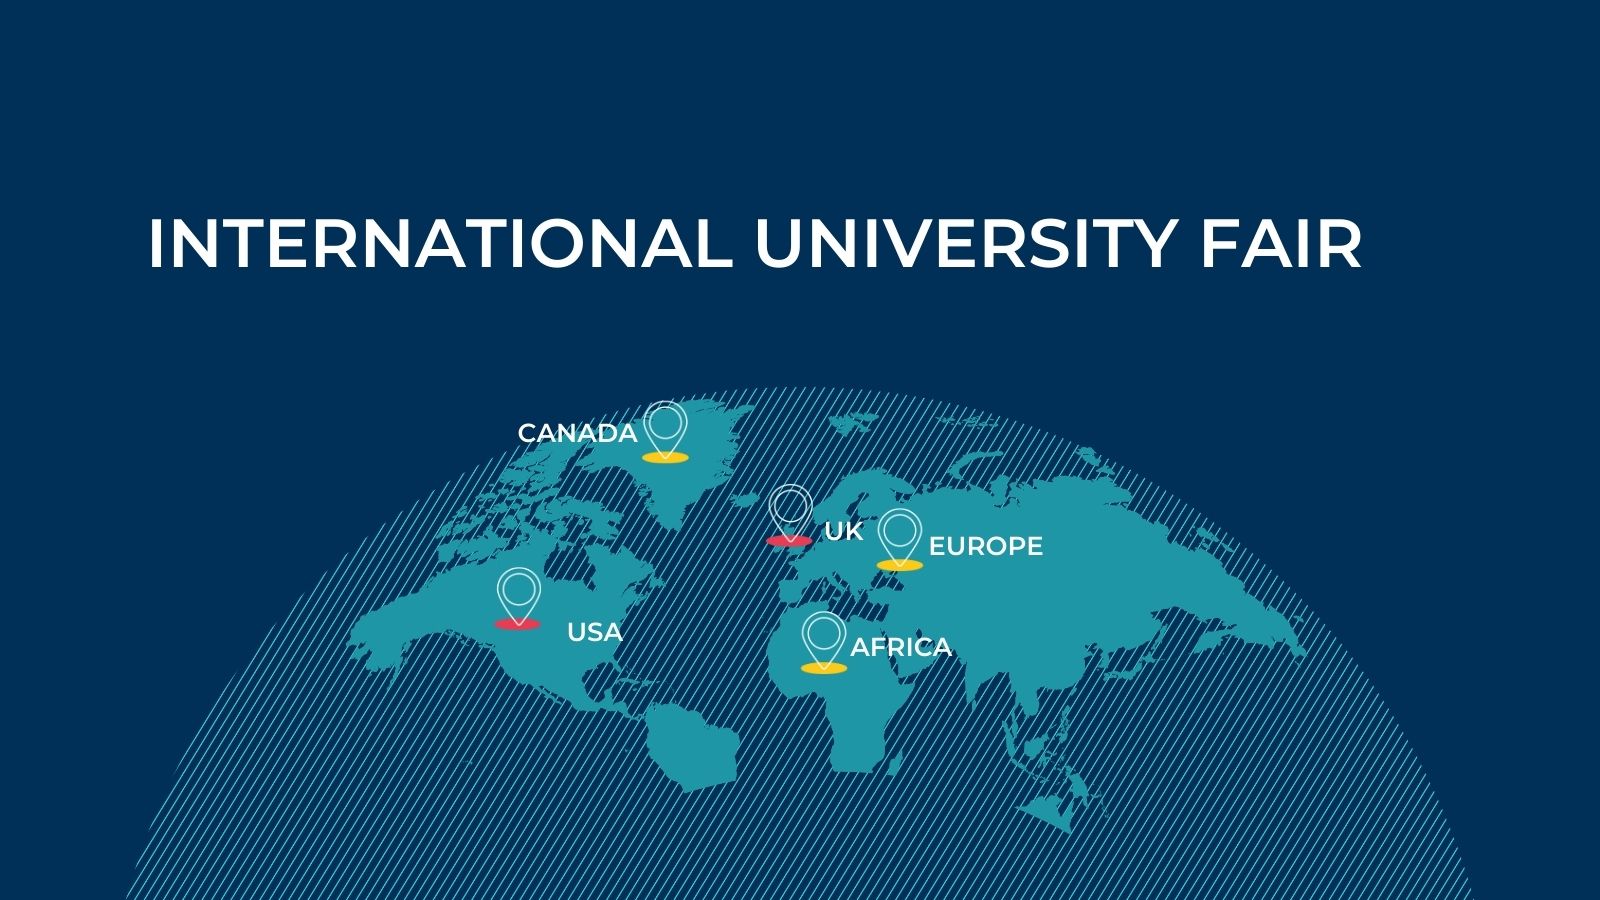 International University Fair - International University Fair